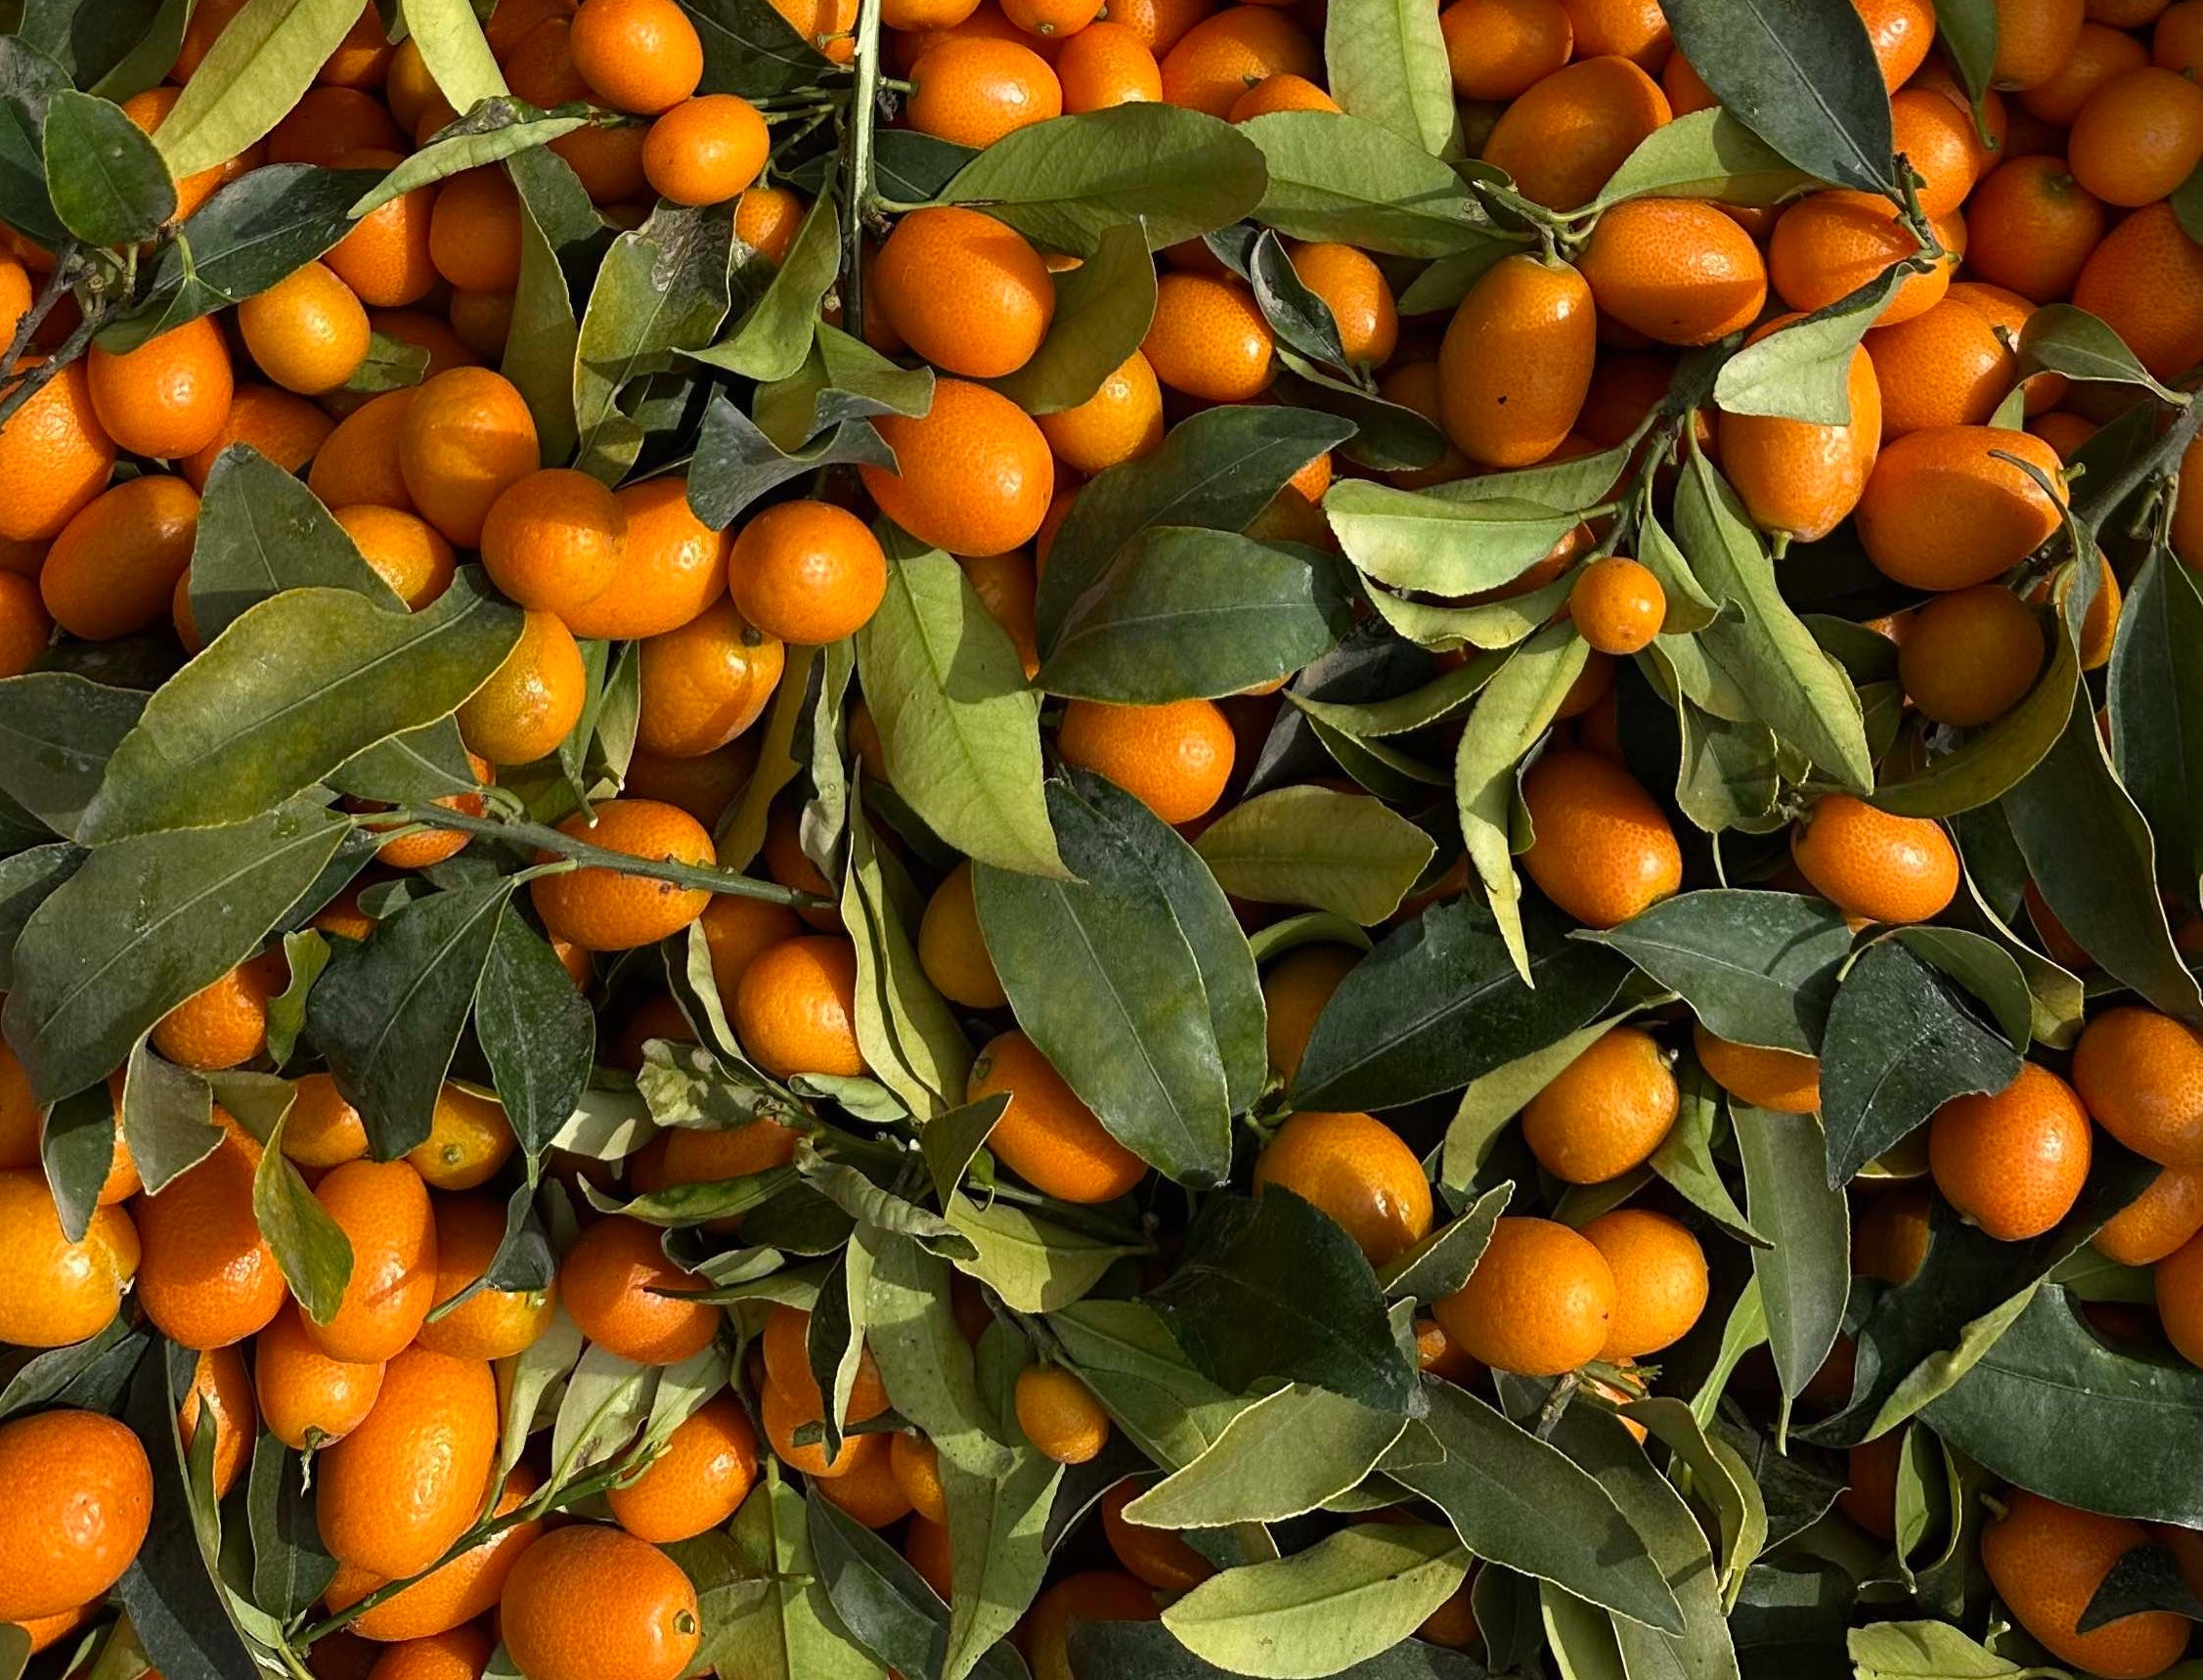 box full of kumquats harvest freshly from the trees of the citrus farm